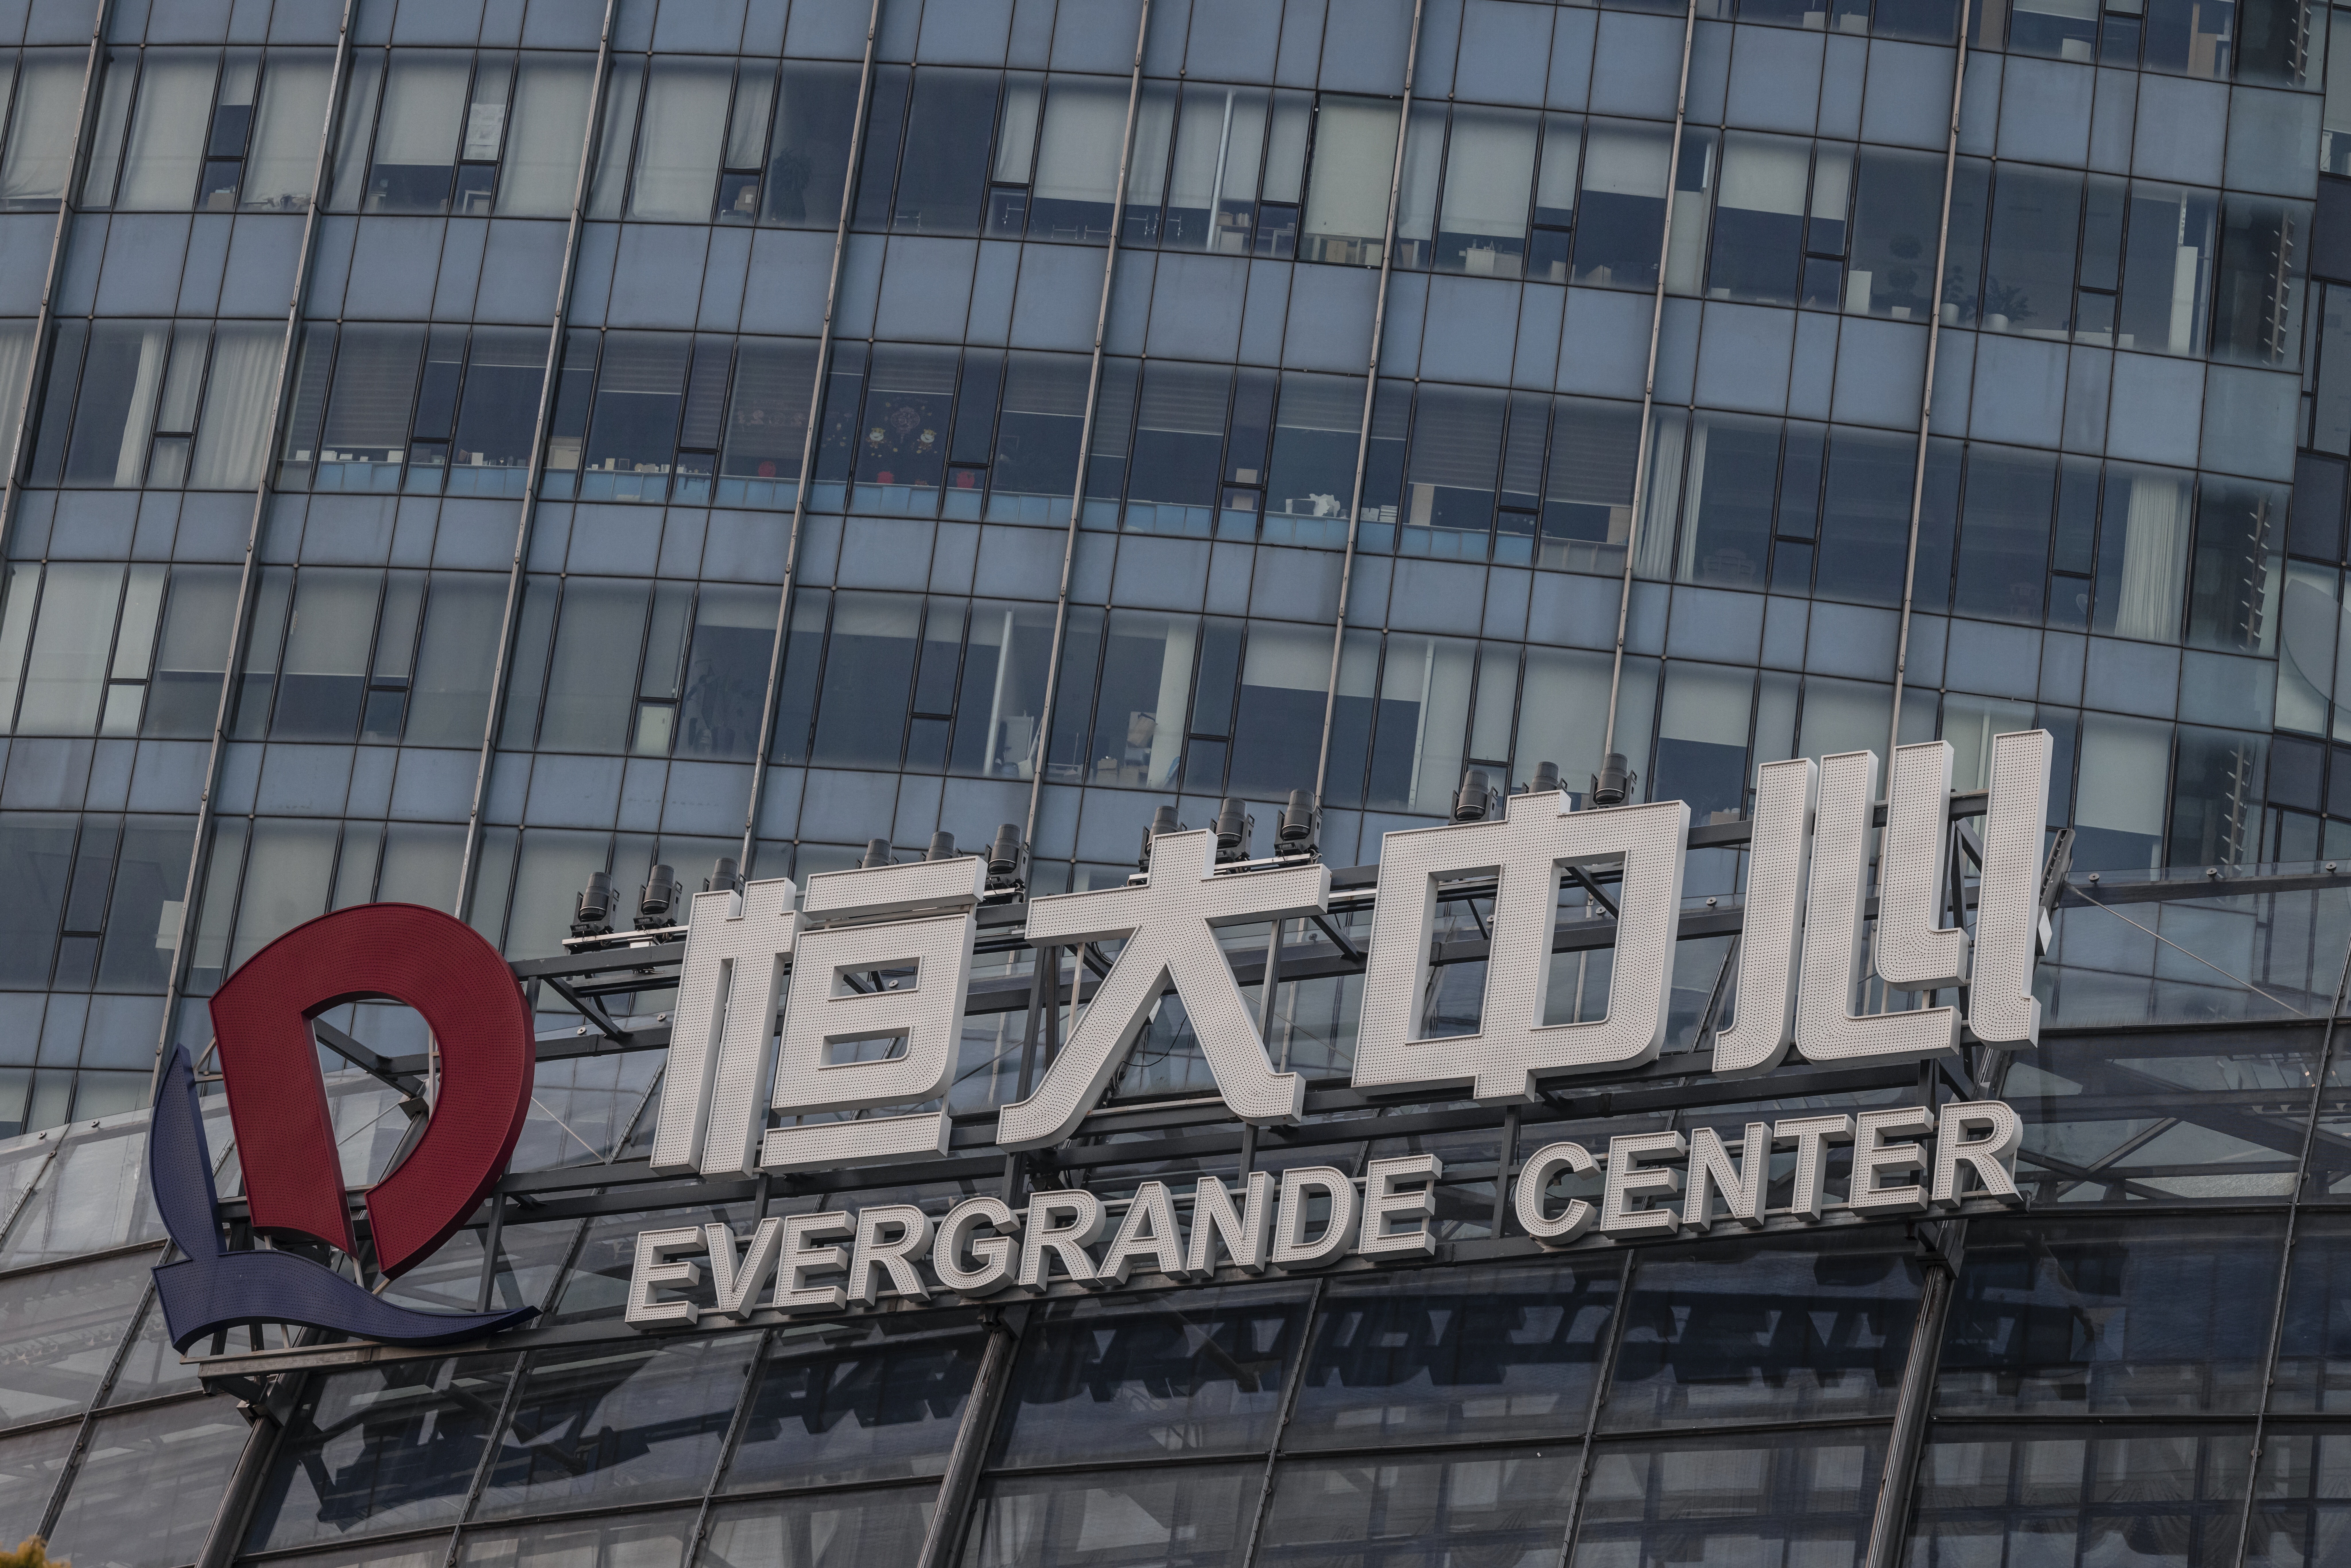 The Evergrande Center logo outside a building in Shanghai. Photo: EPA-EFE